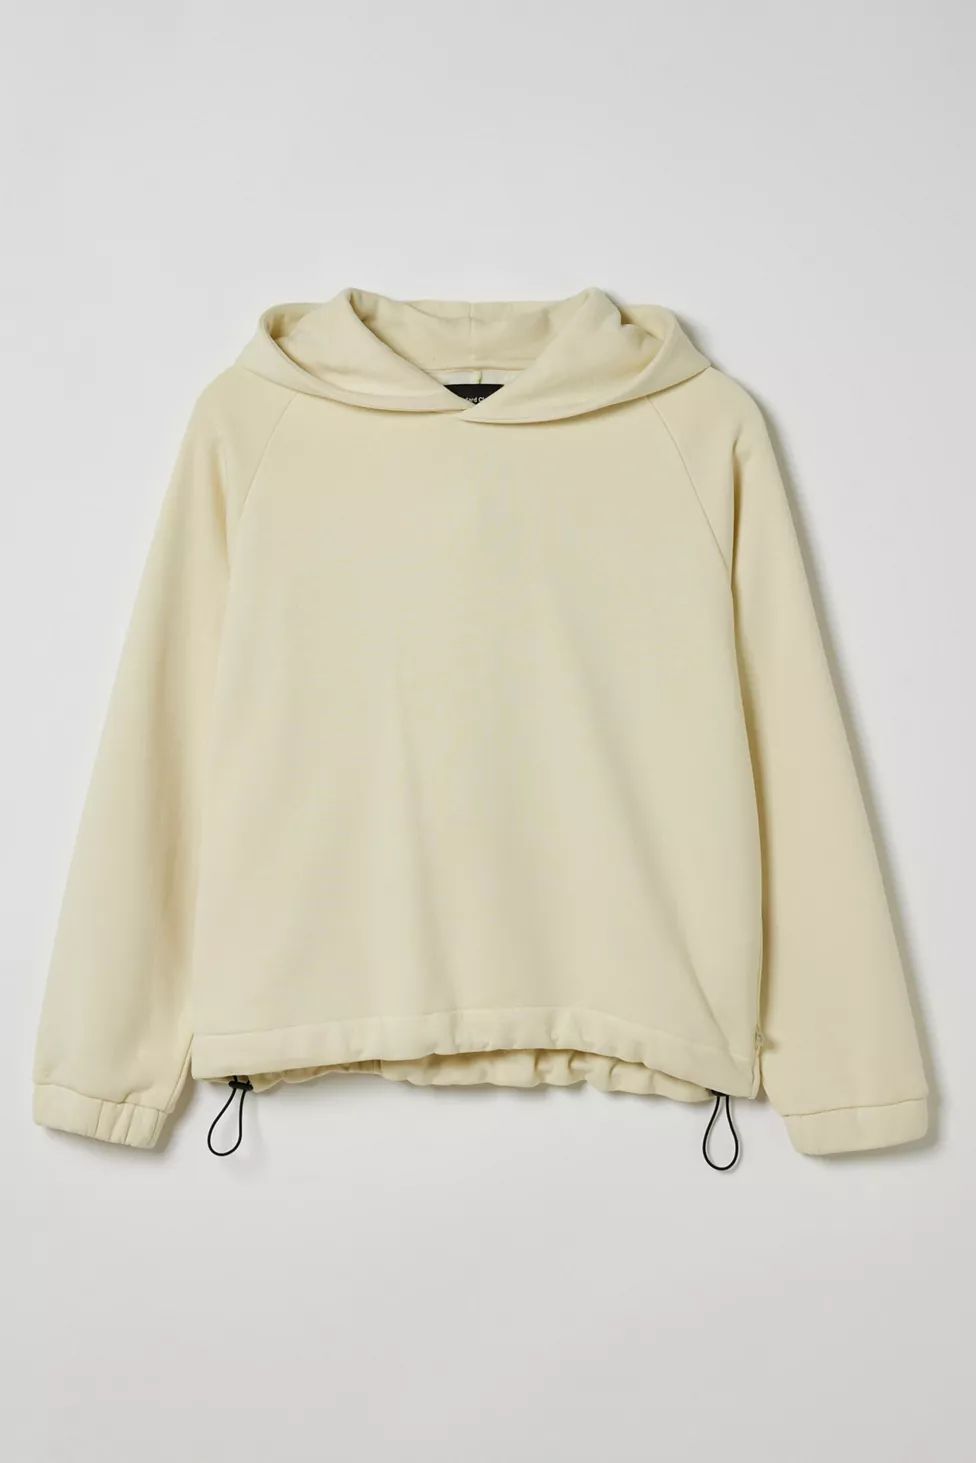 Standard Cloth Free Throw Hoodie Sweatshirt | Urban Outfitters (US and RoW)